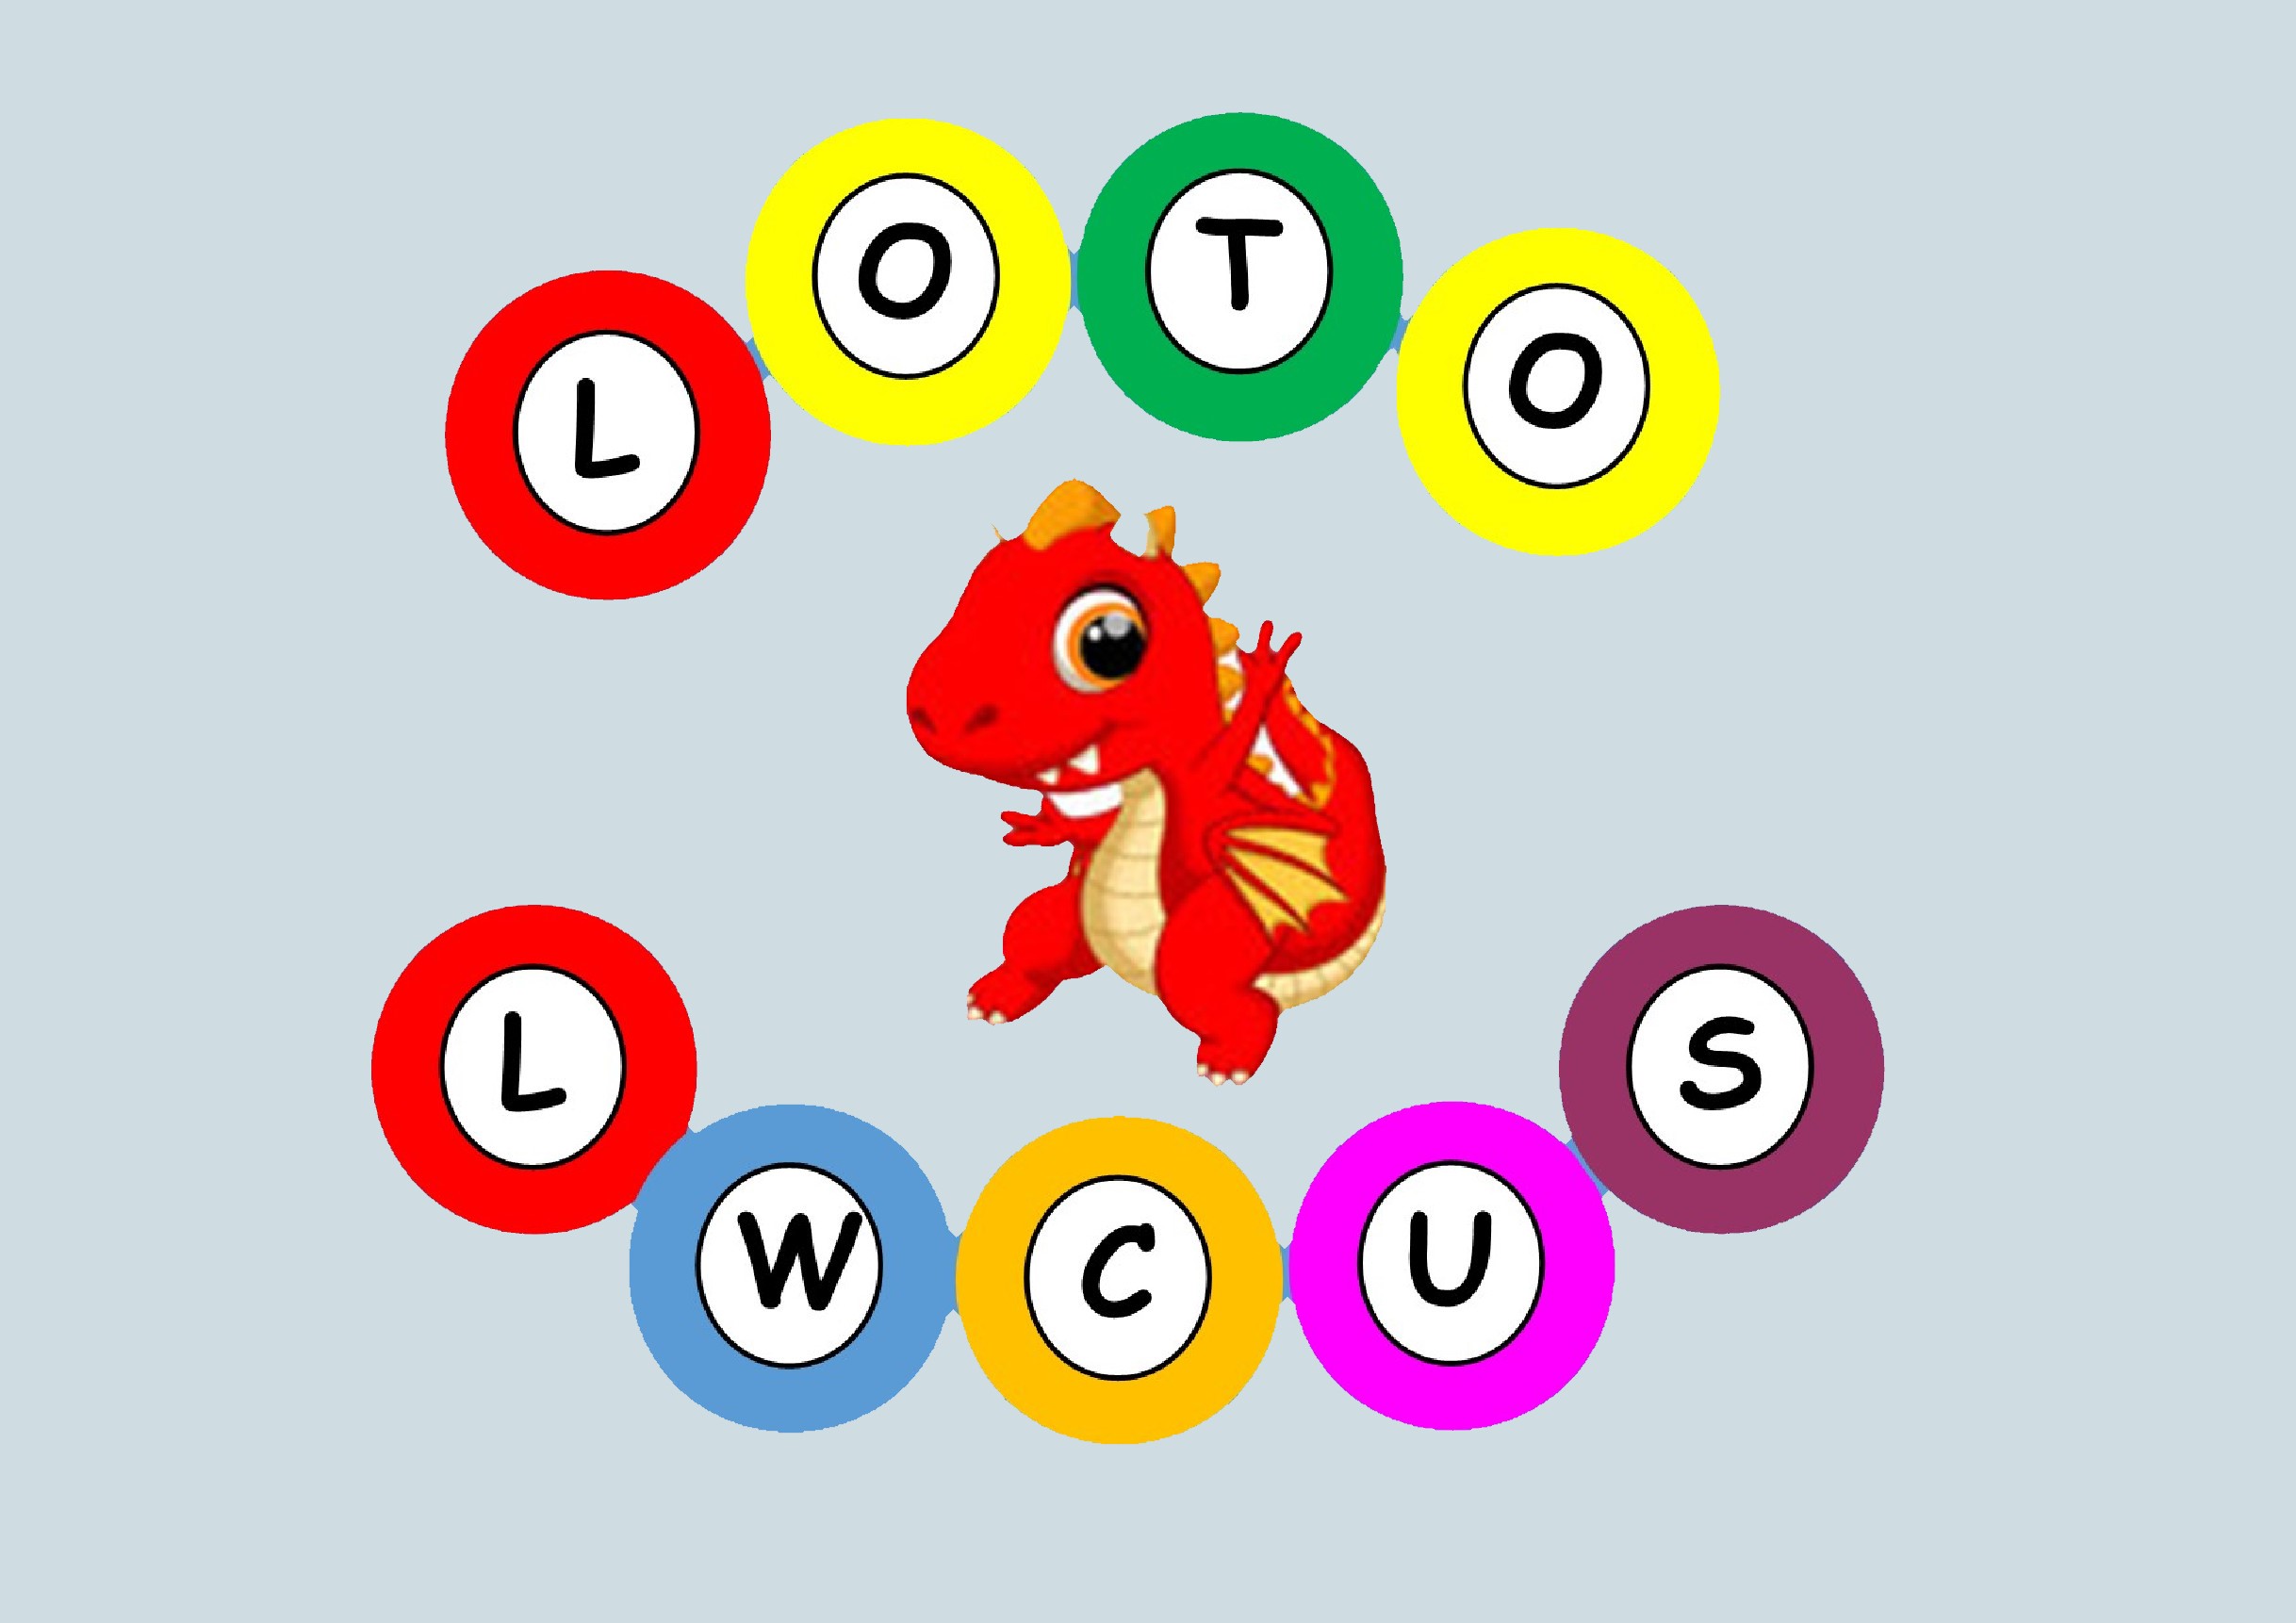 Loto Lwcus Logo